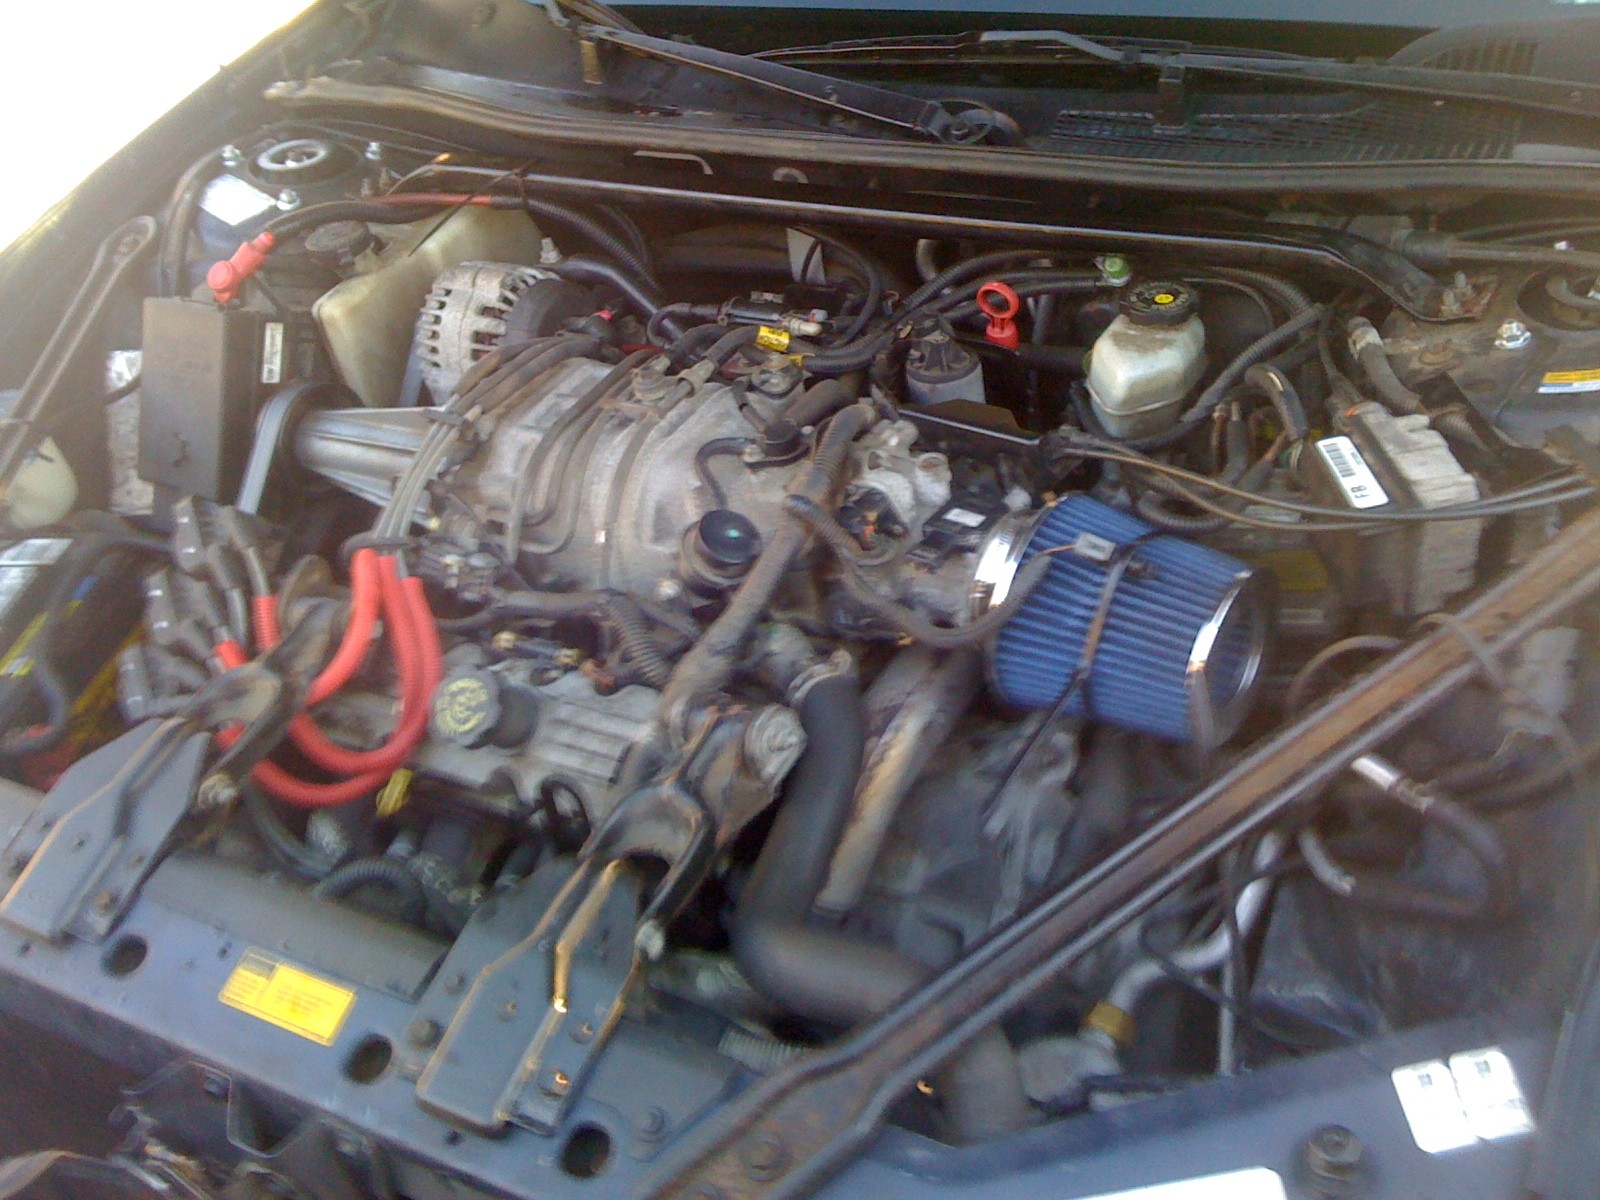 1999 Buick Regal Engine Diagram 1999 Buick Regal Engine Diagram Of 1999 Buick Regal Engine Diagram